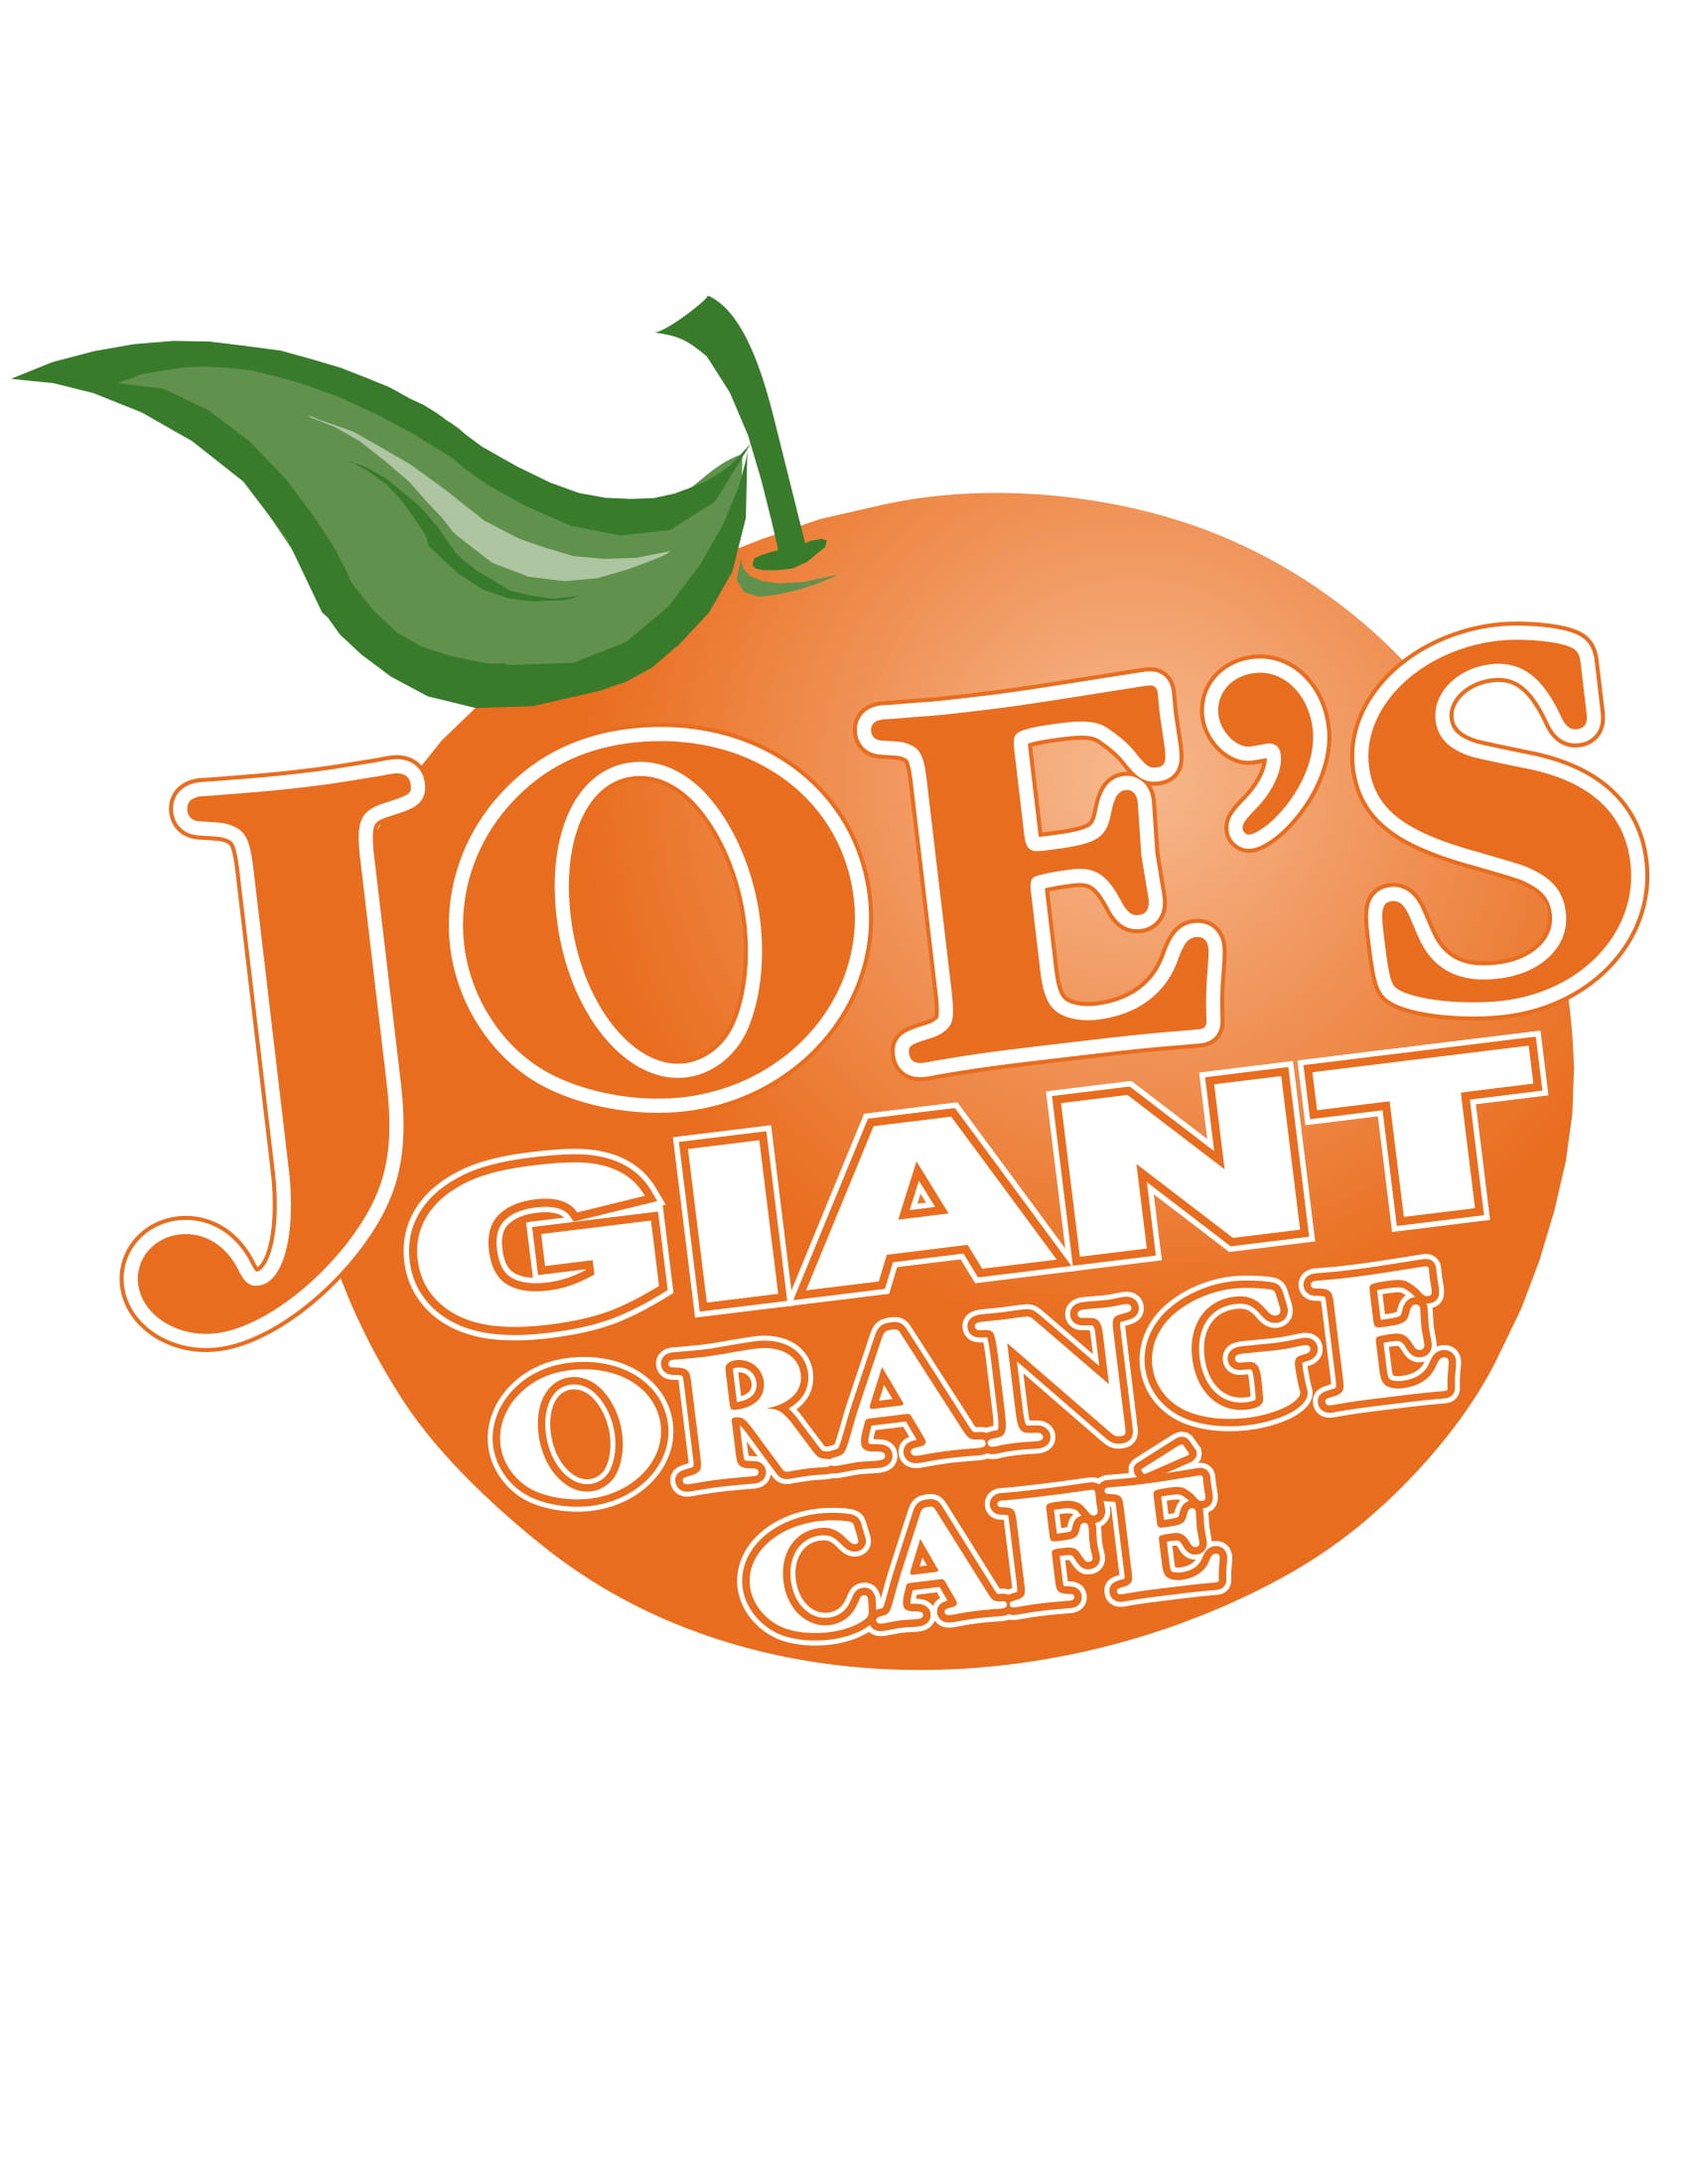 Joe's Giant Orange | Catering Online Order